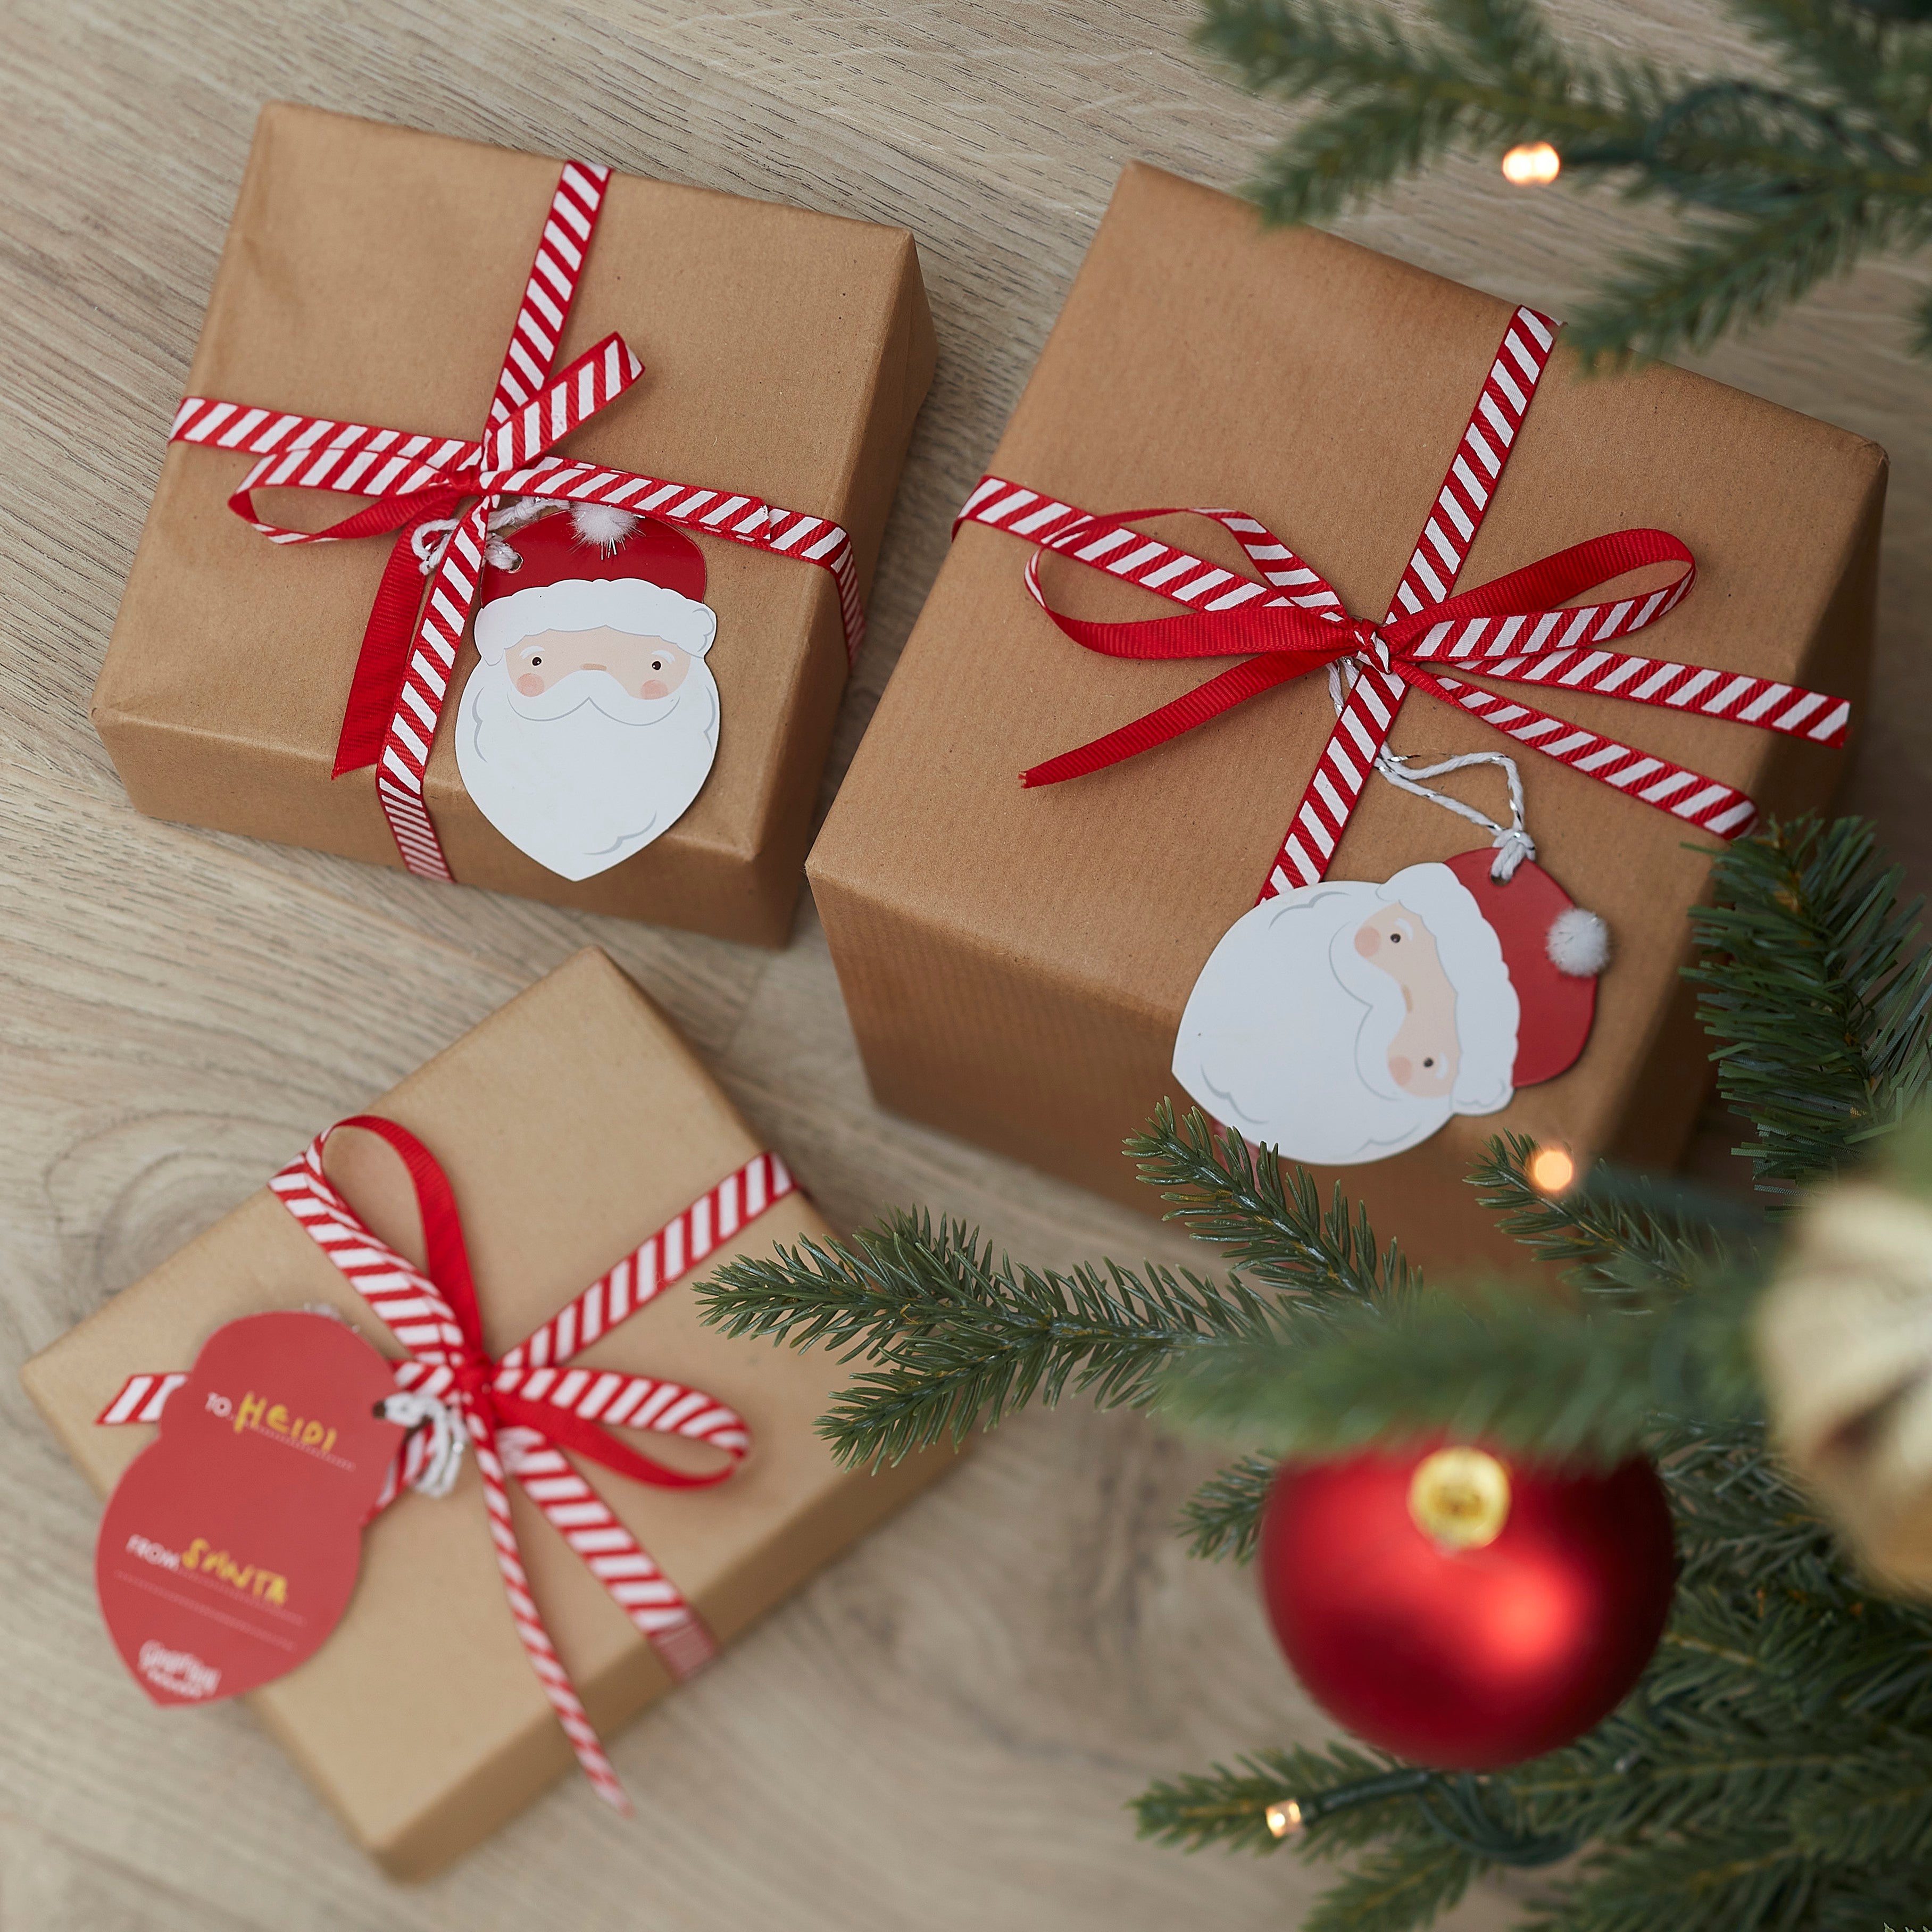 Packaging set Santa Face with Pom Pom Hat